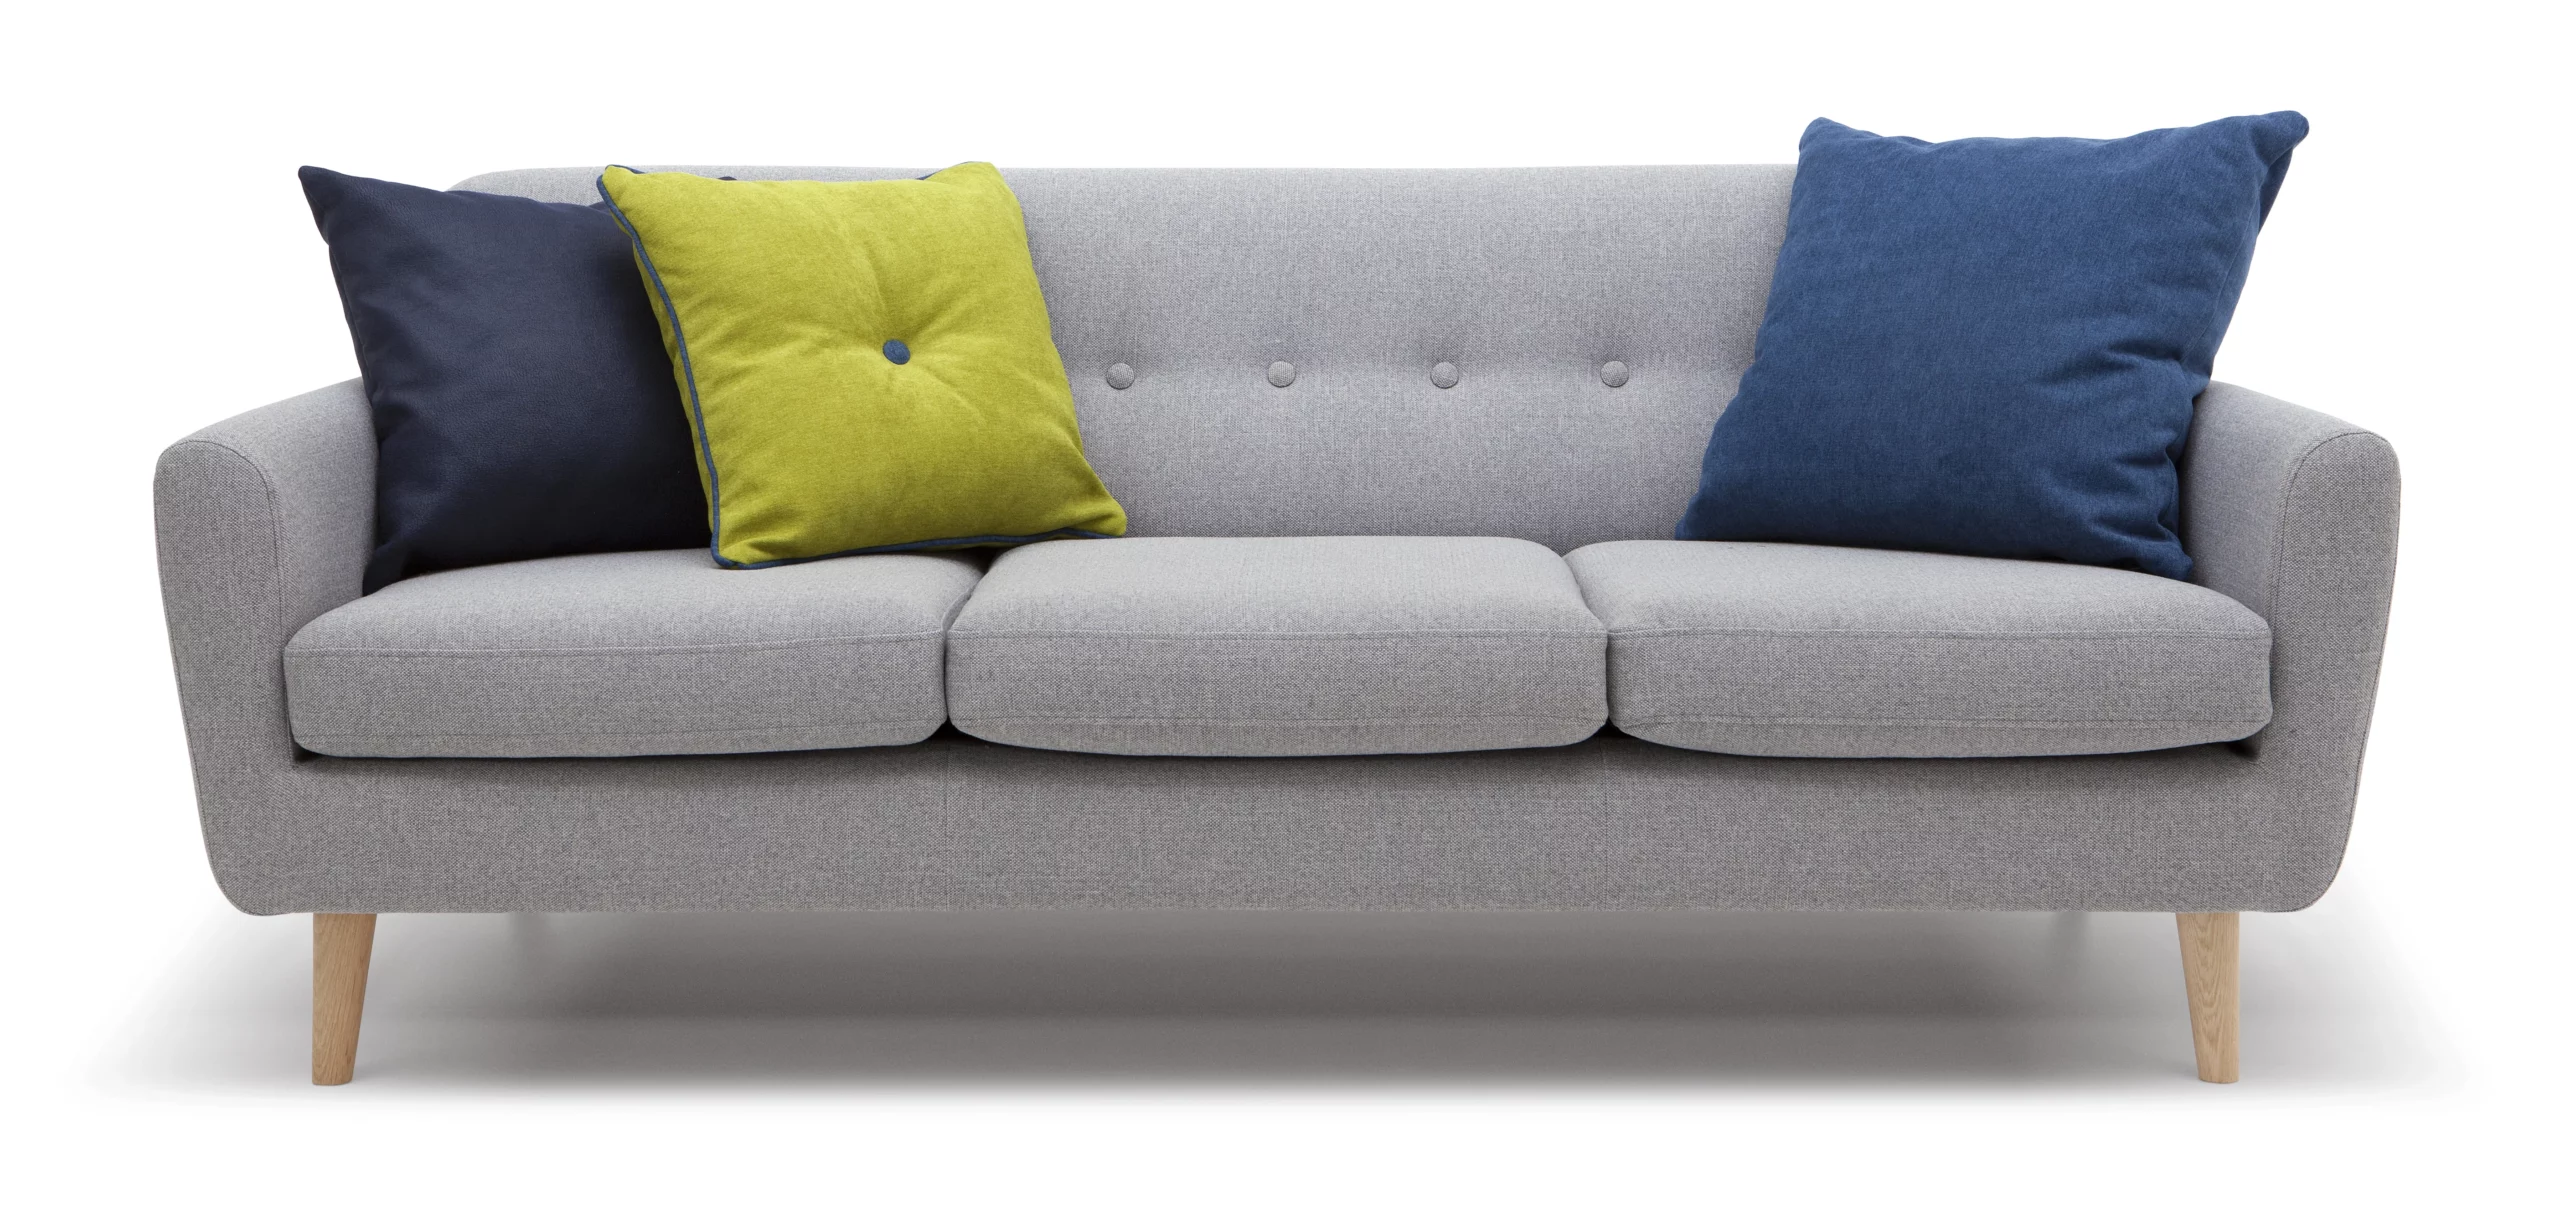 Gray Living Room Sofa